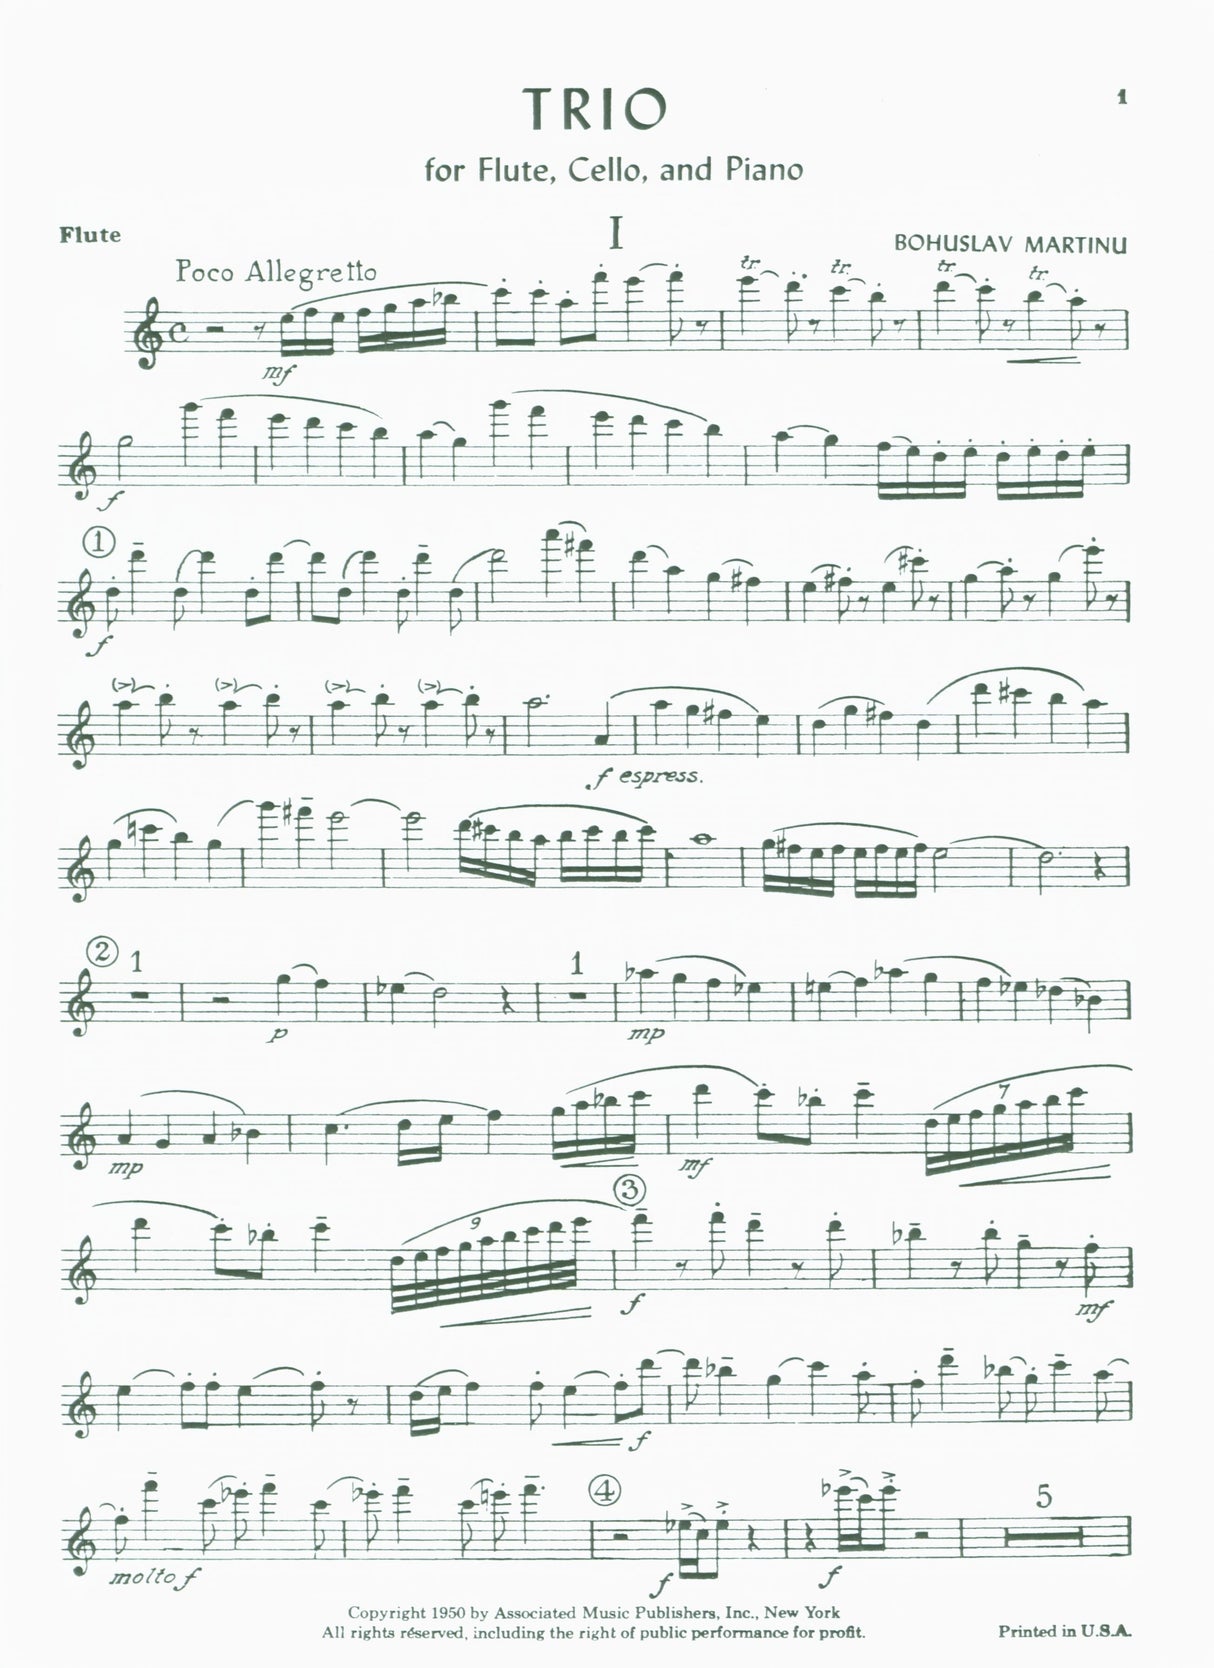 Martinů: Trio for Flute, Cello and Piano, H 300